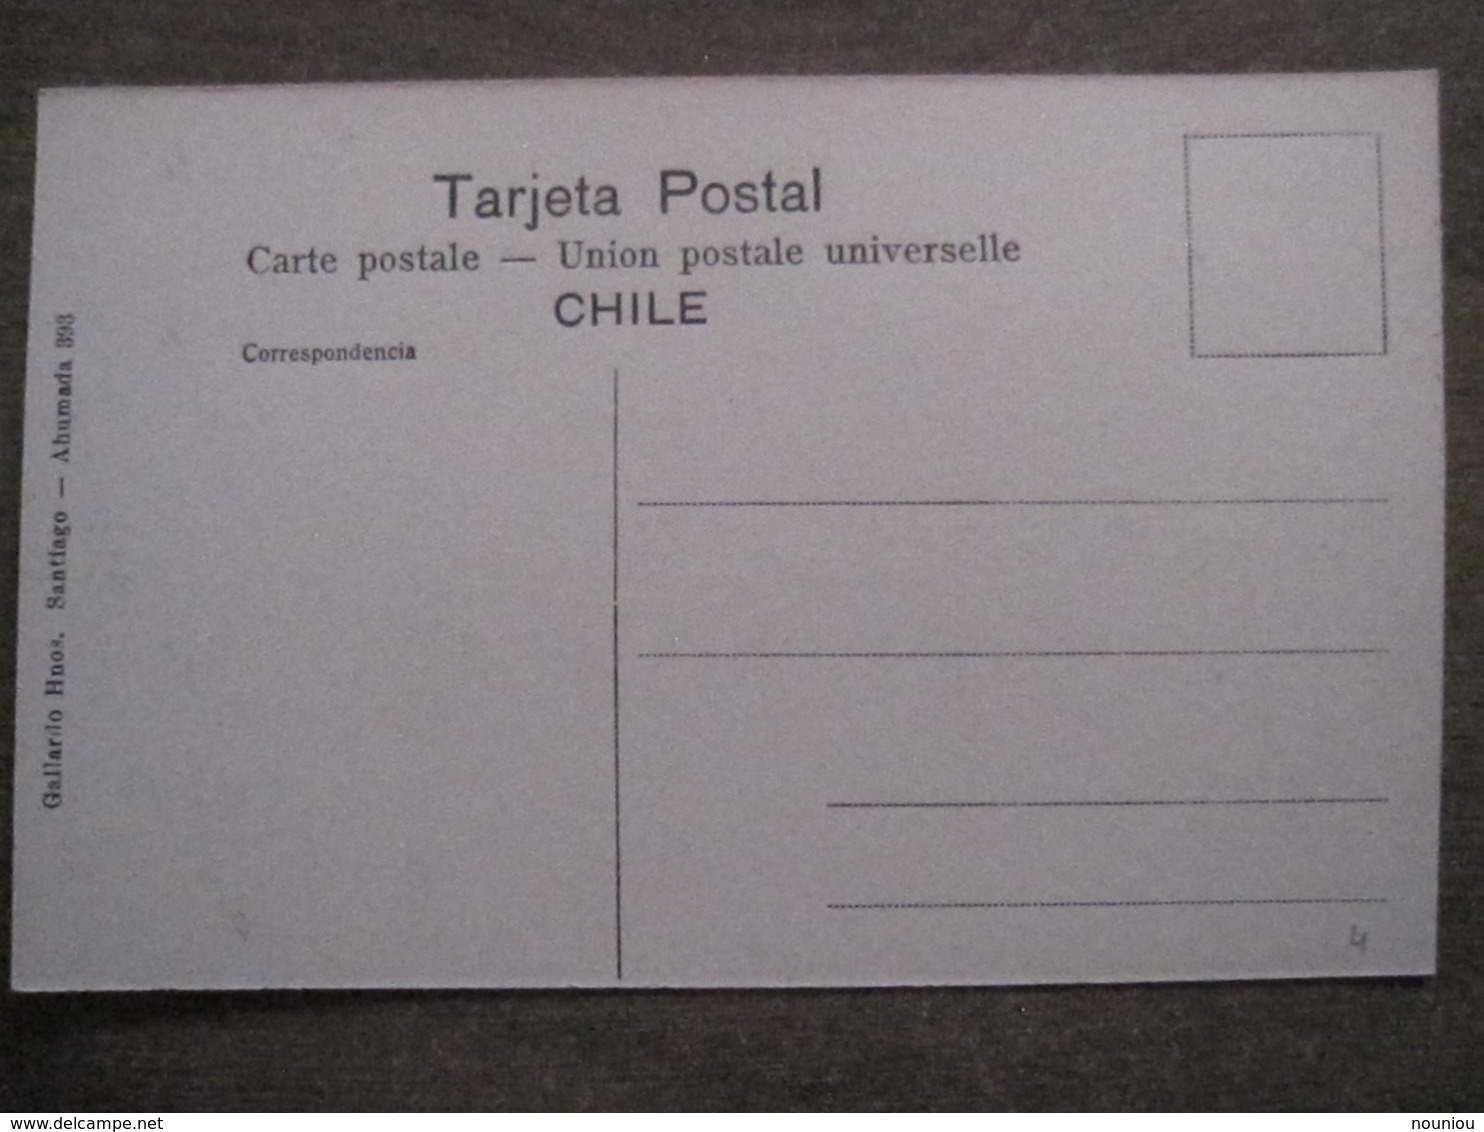 Tarjeta Postal - Chile Chili - Santiago - Tribunas Del Club Hipico - Hnos Ahumada 393 No. 97 - Foto Leon - Chili